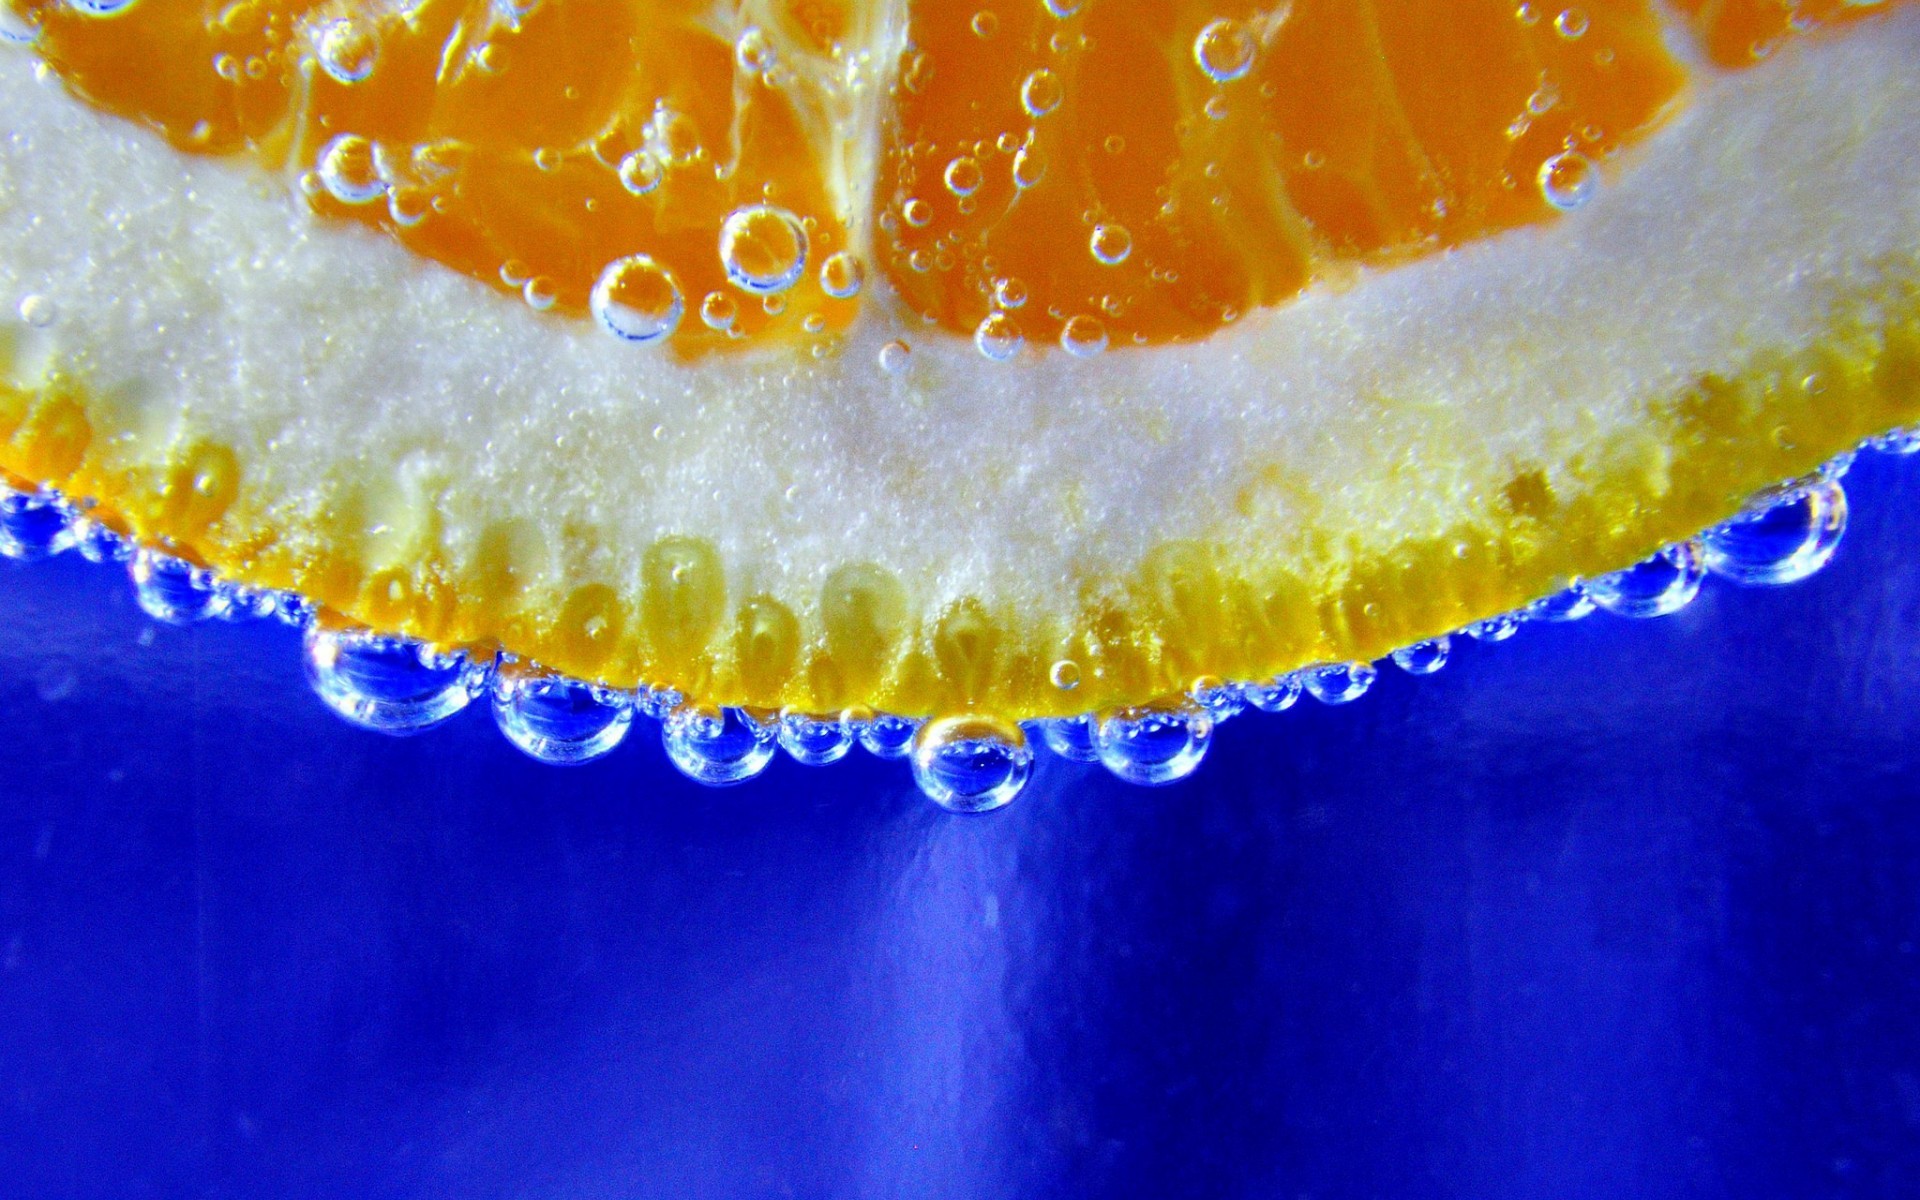 General 1920x1200 minimalism underwater bubbles water fruit orange (fruit) blue background closeup water drops blue food